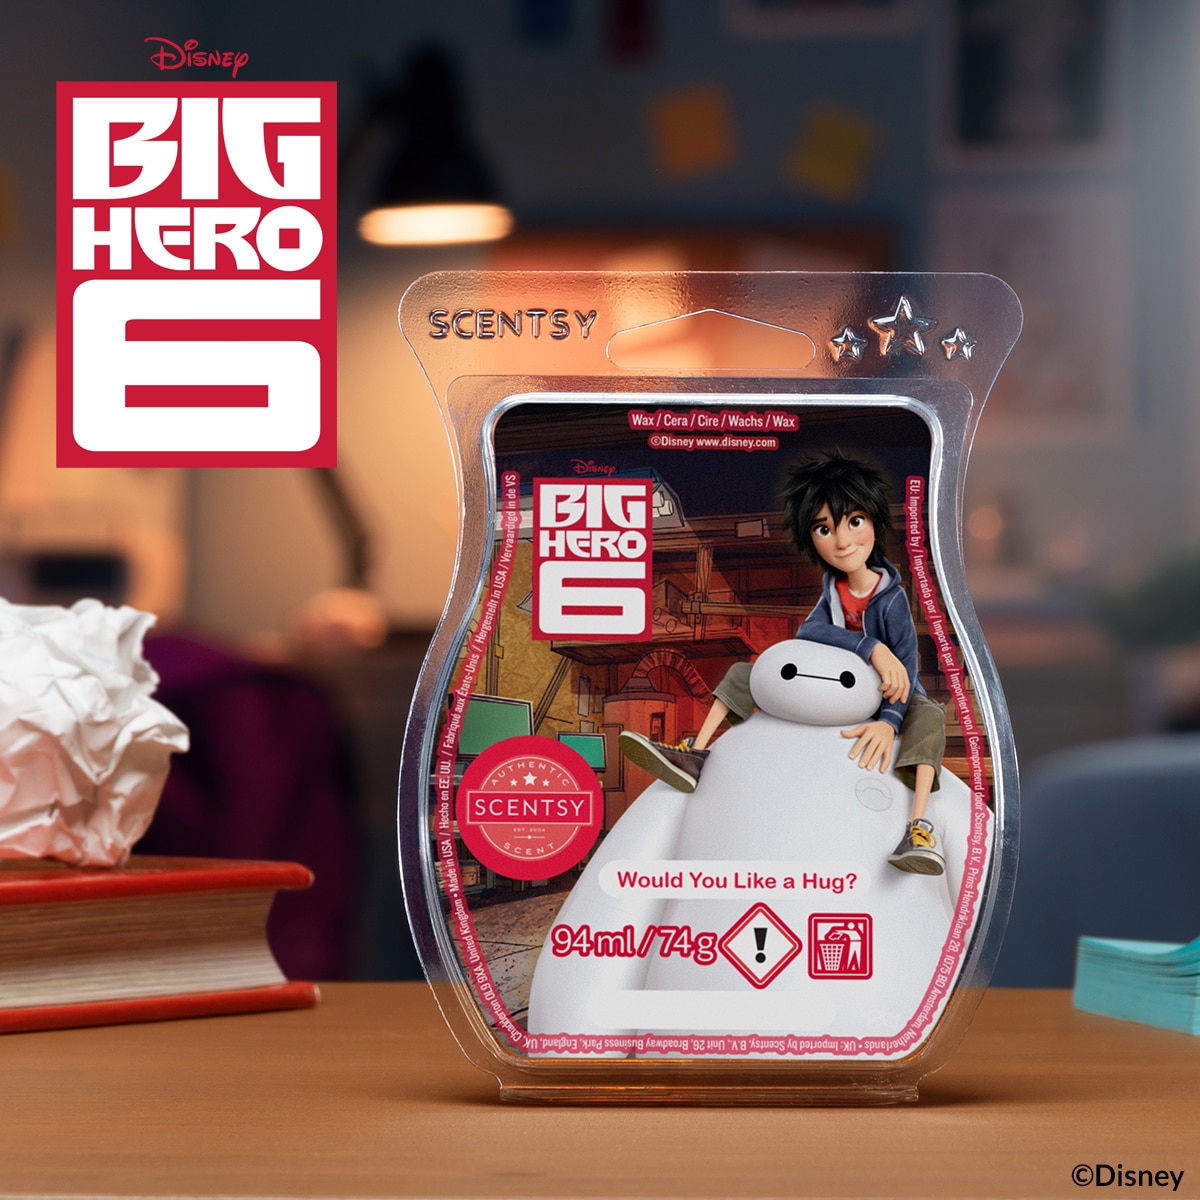 Big Hero 6: Would You Like a Hug? – Scentsy Bar